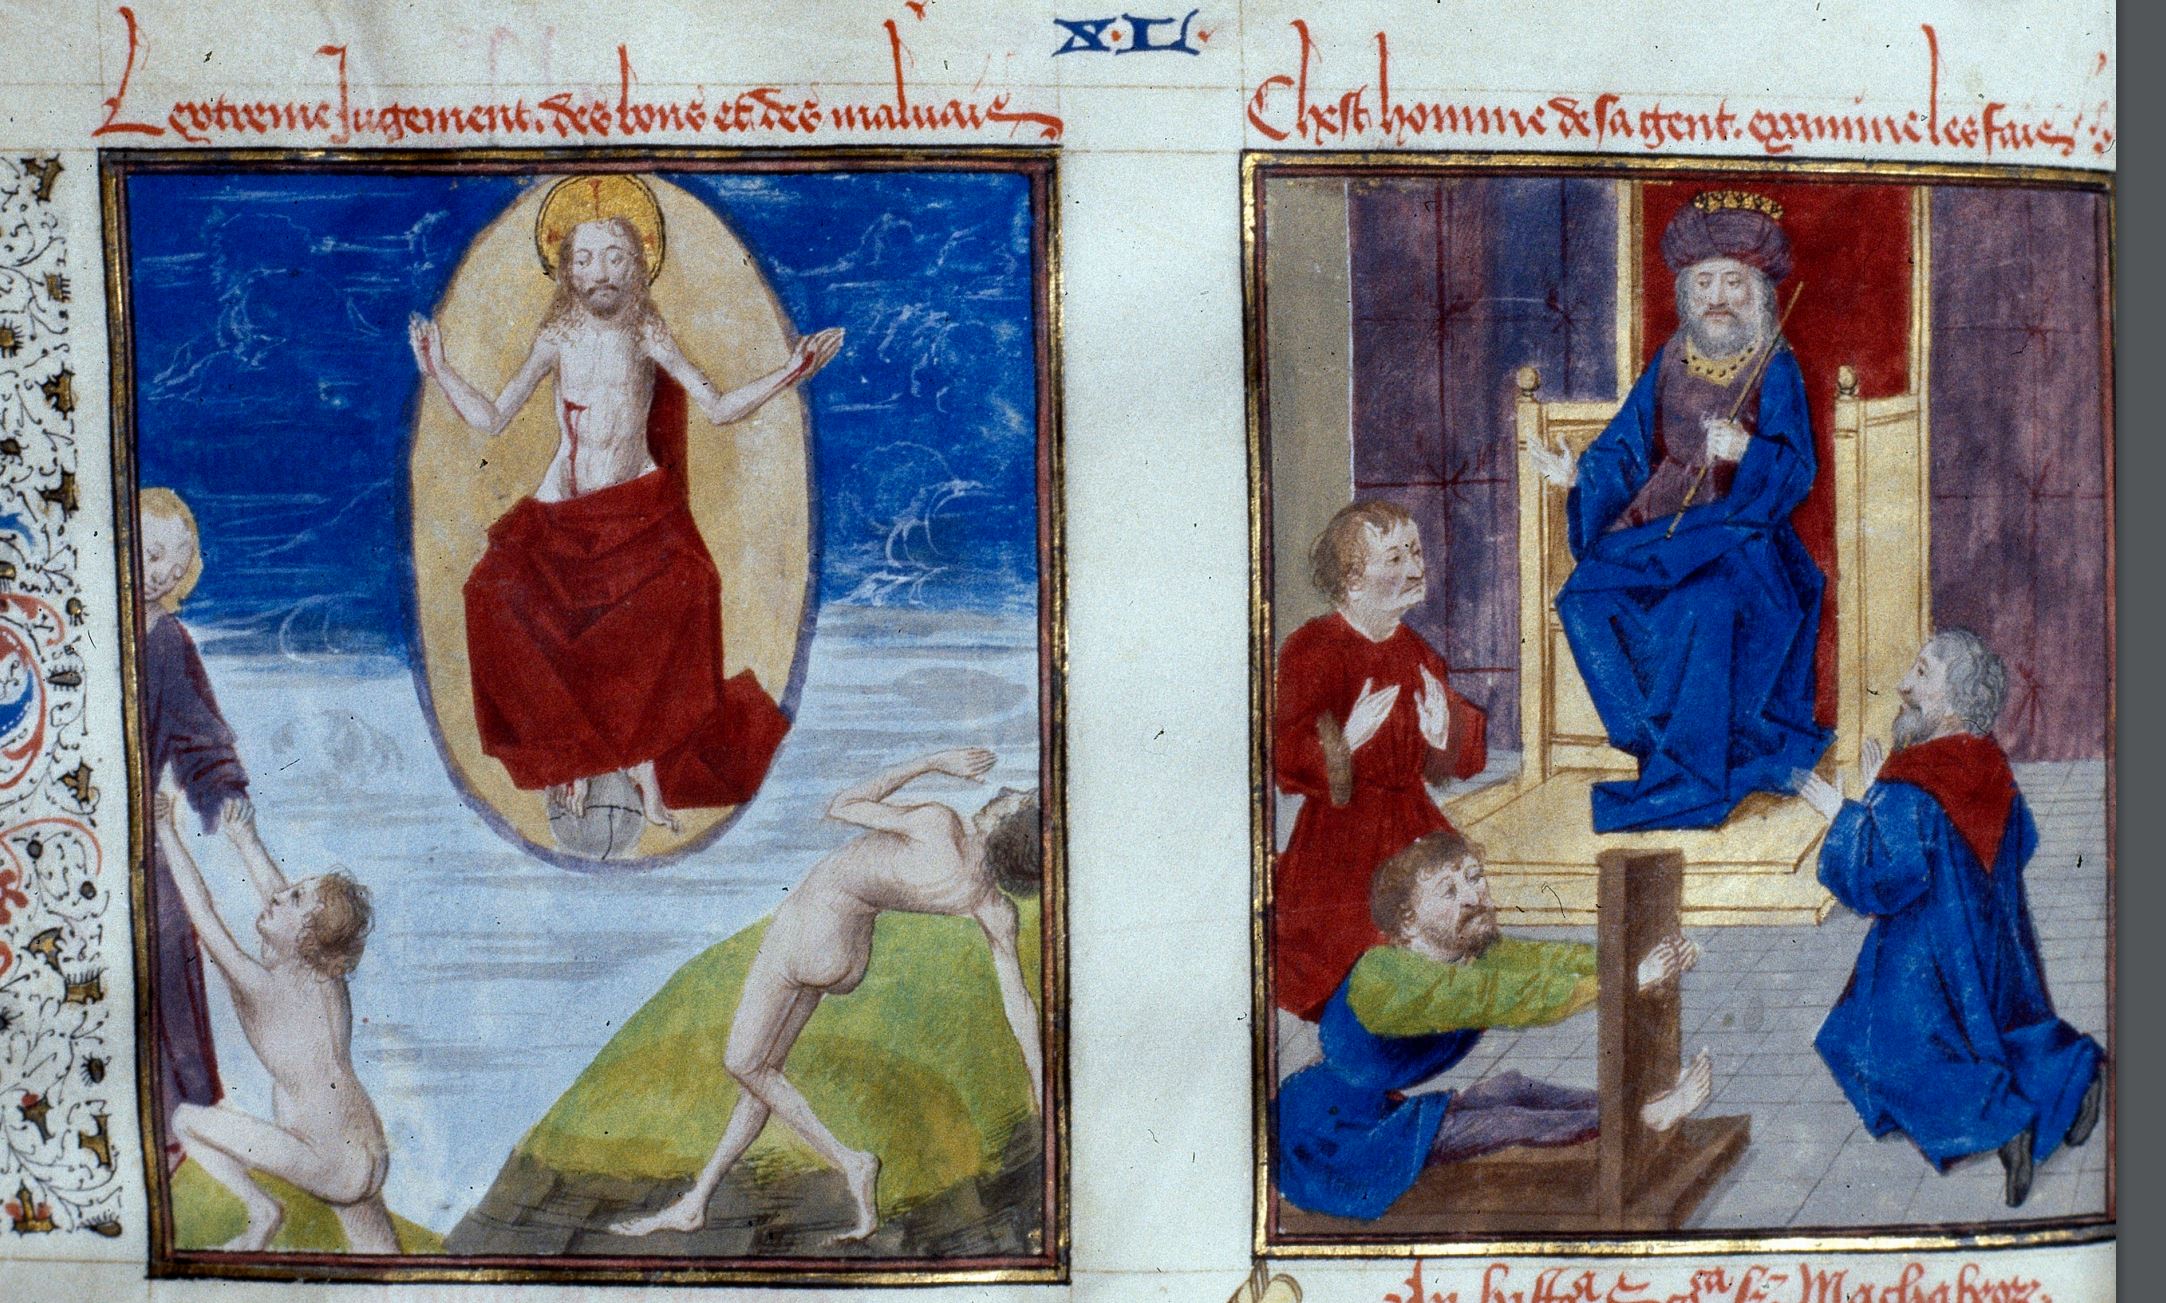 Speculum humanae salvationis 1450-60 Berlin, Kunstbibliothek CD 1 R (formerly Lipp. 403), fol. 44v